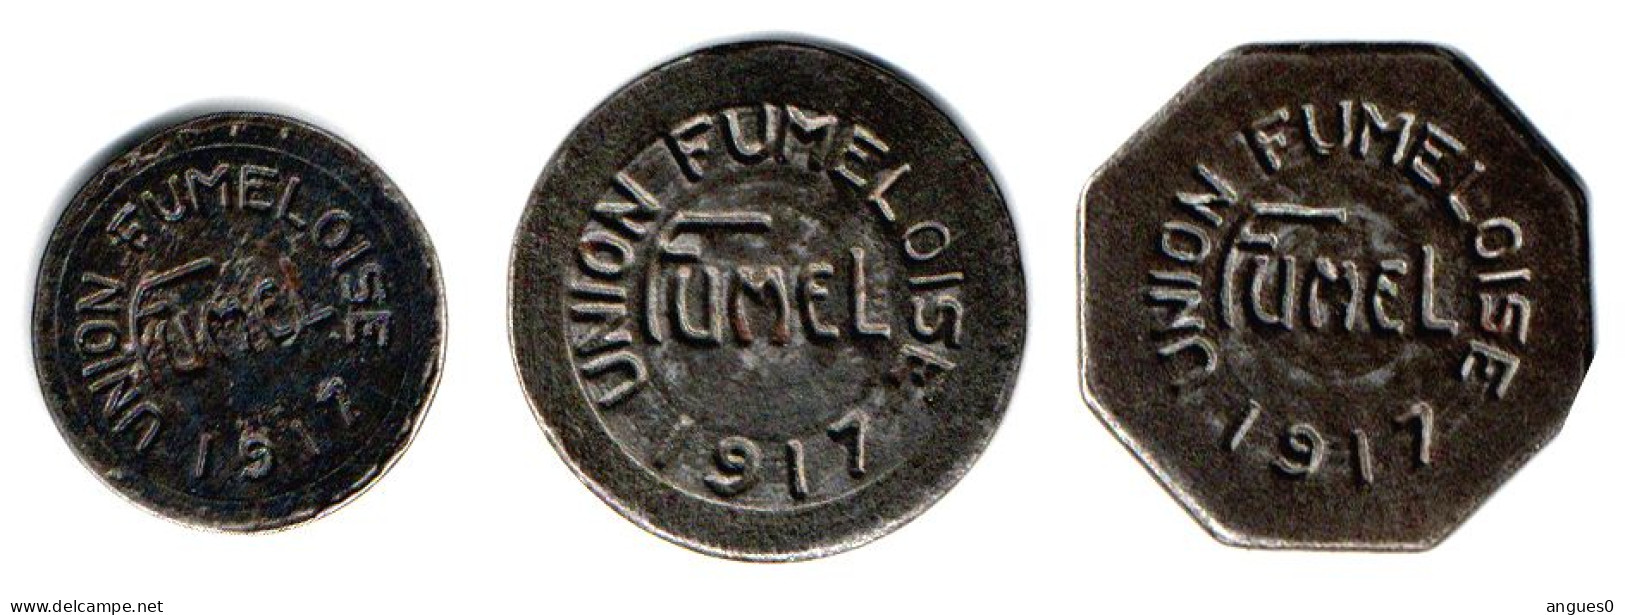 SERIE  UNION FUMELOISE - Kiloware - Münzen